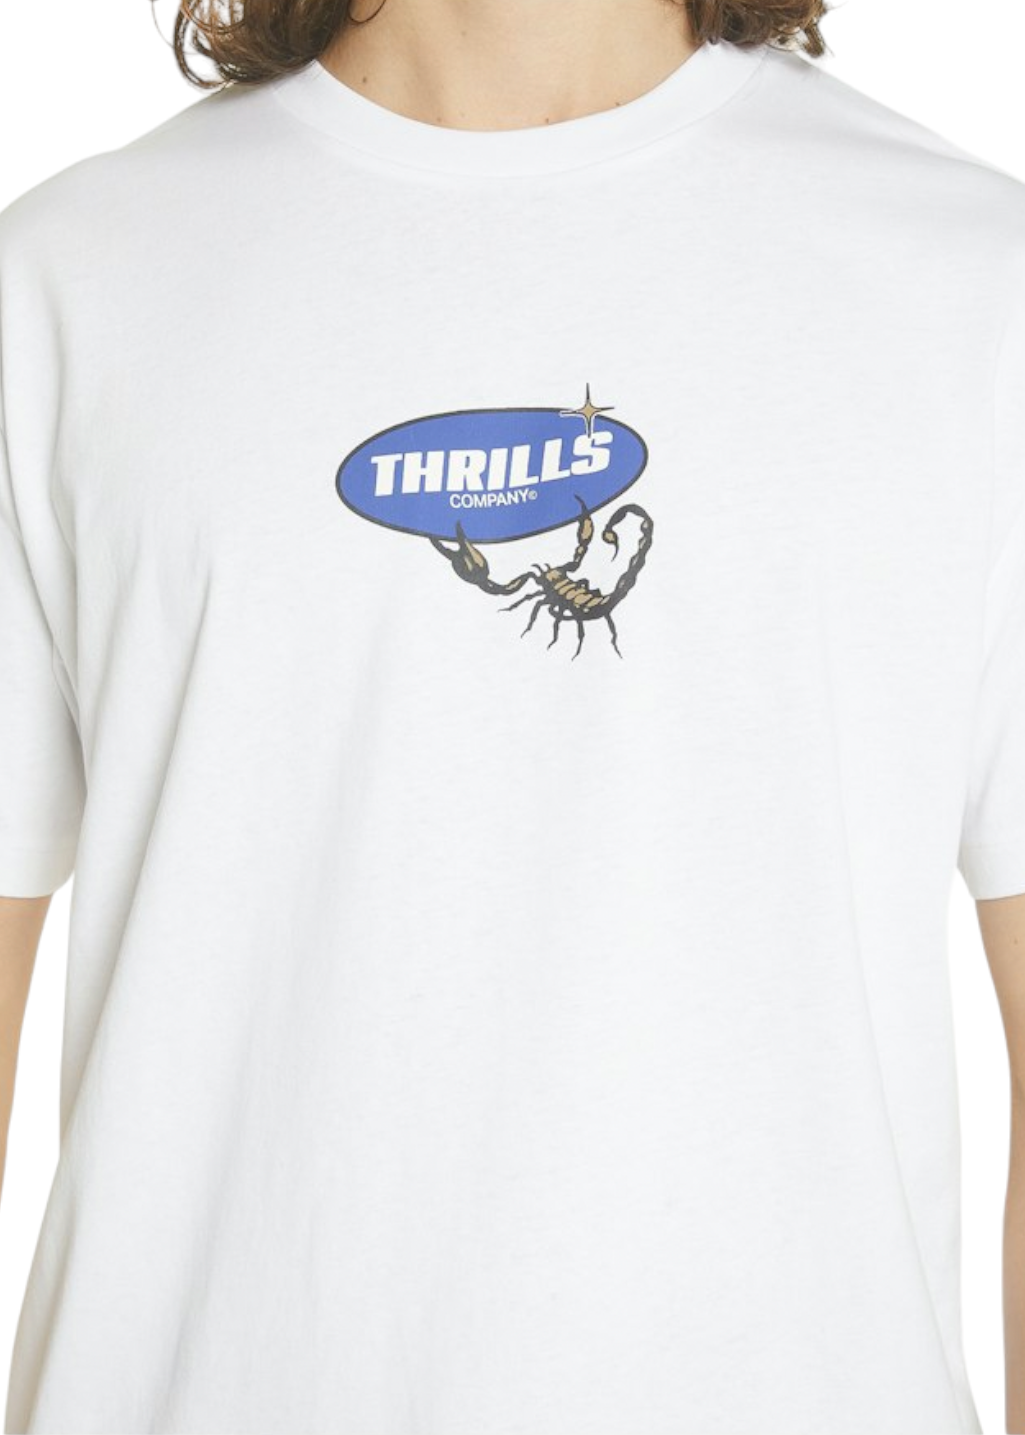 THRILLS - Lifted Merch Fit Tee - White - Hardpressed Print Studio Inc.